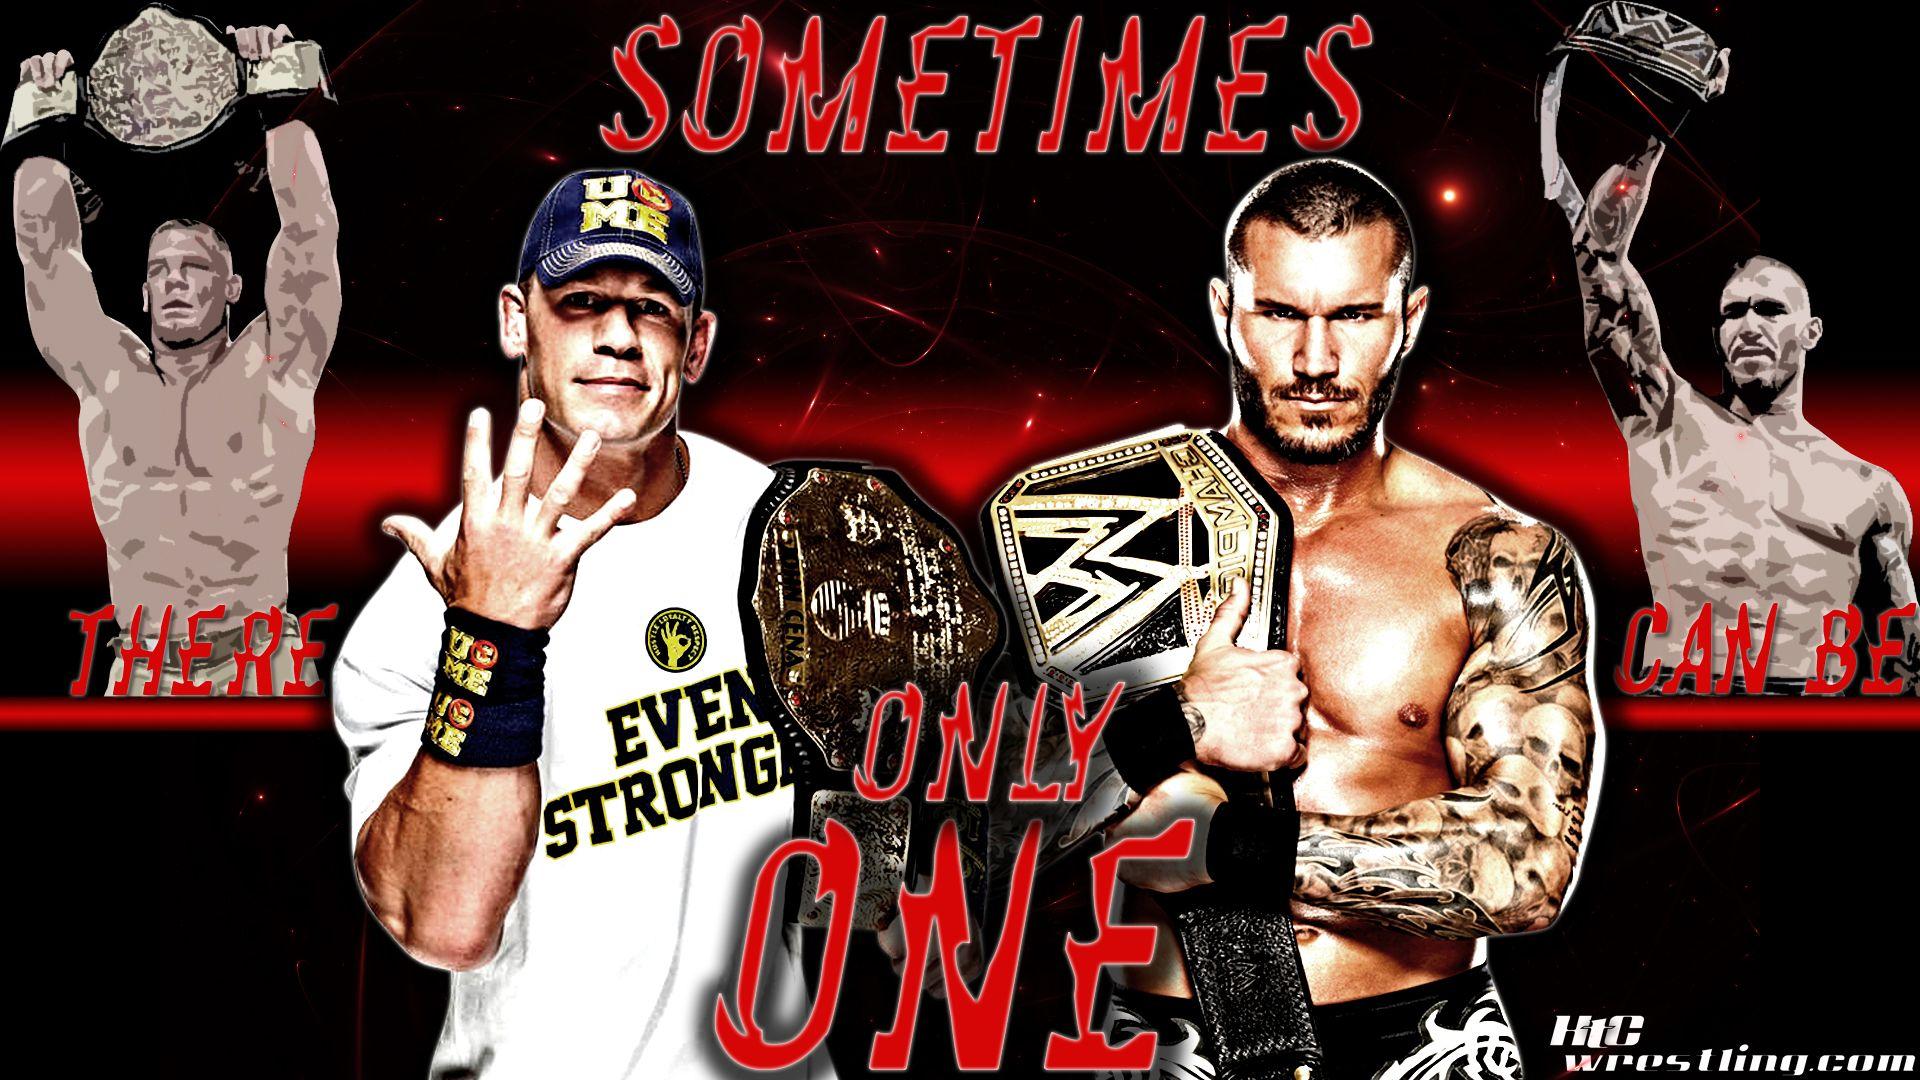 WWE and TNA. Randy orton, John